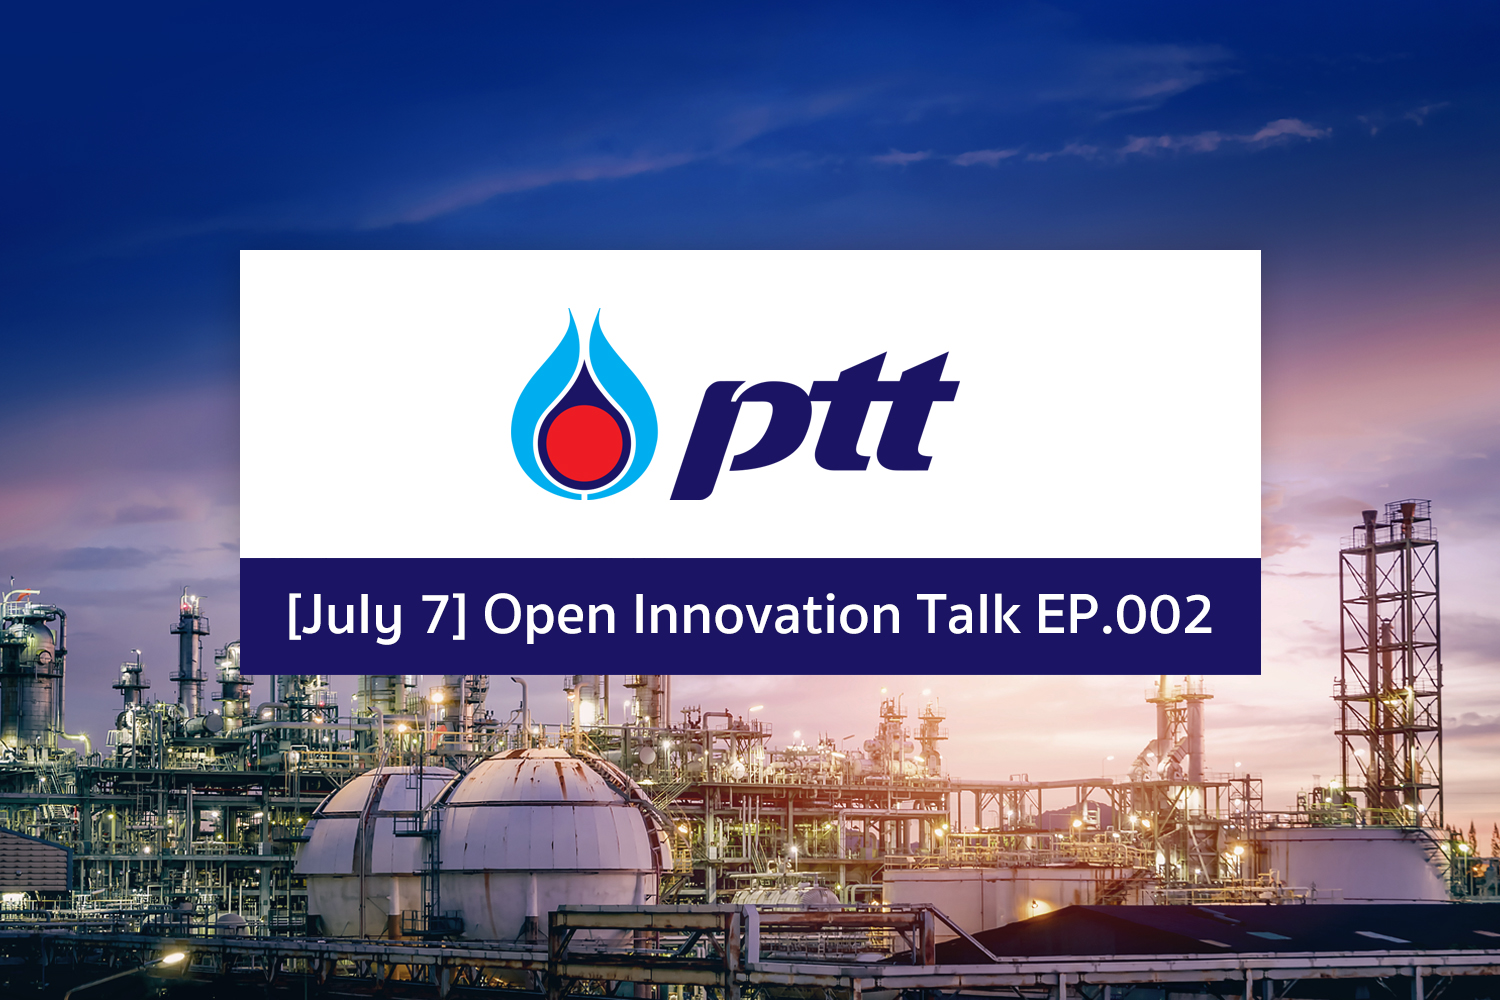 [July 7] Open Innovation Talk EP.002 | PTT Public Company Limited *日本人向けセミナーのメイン画像